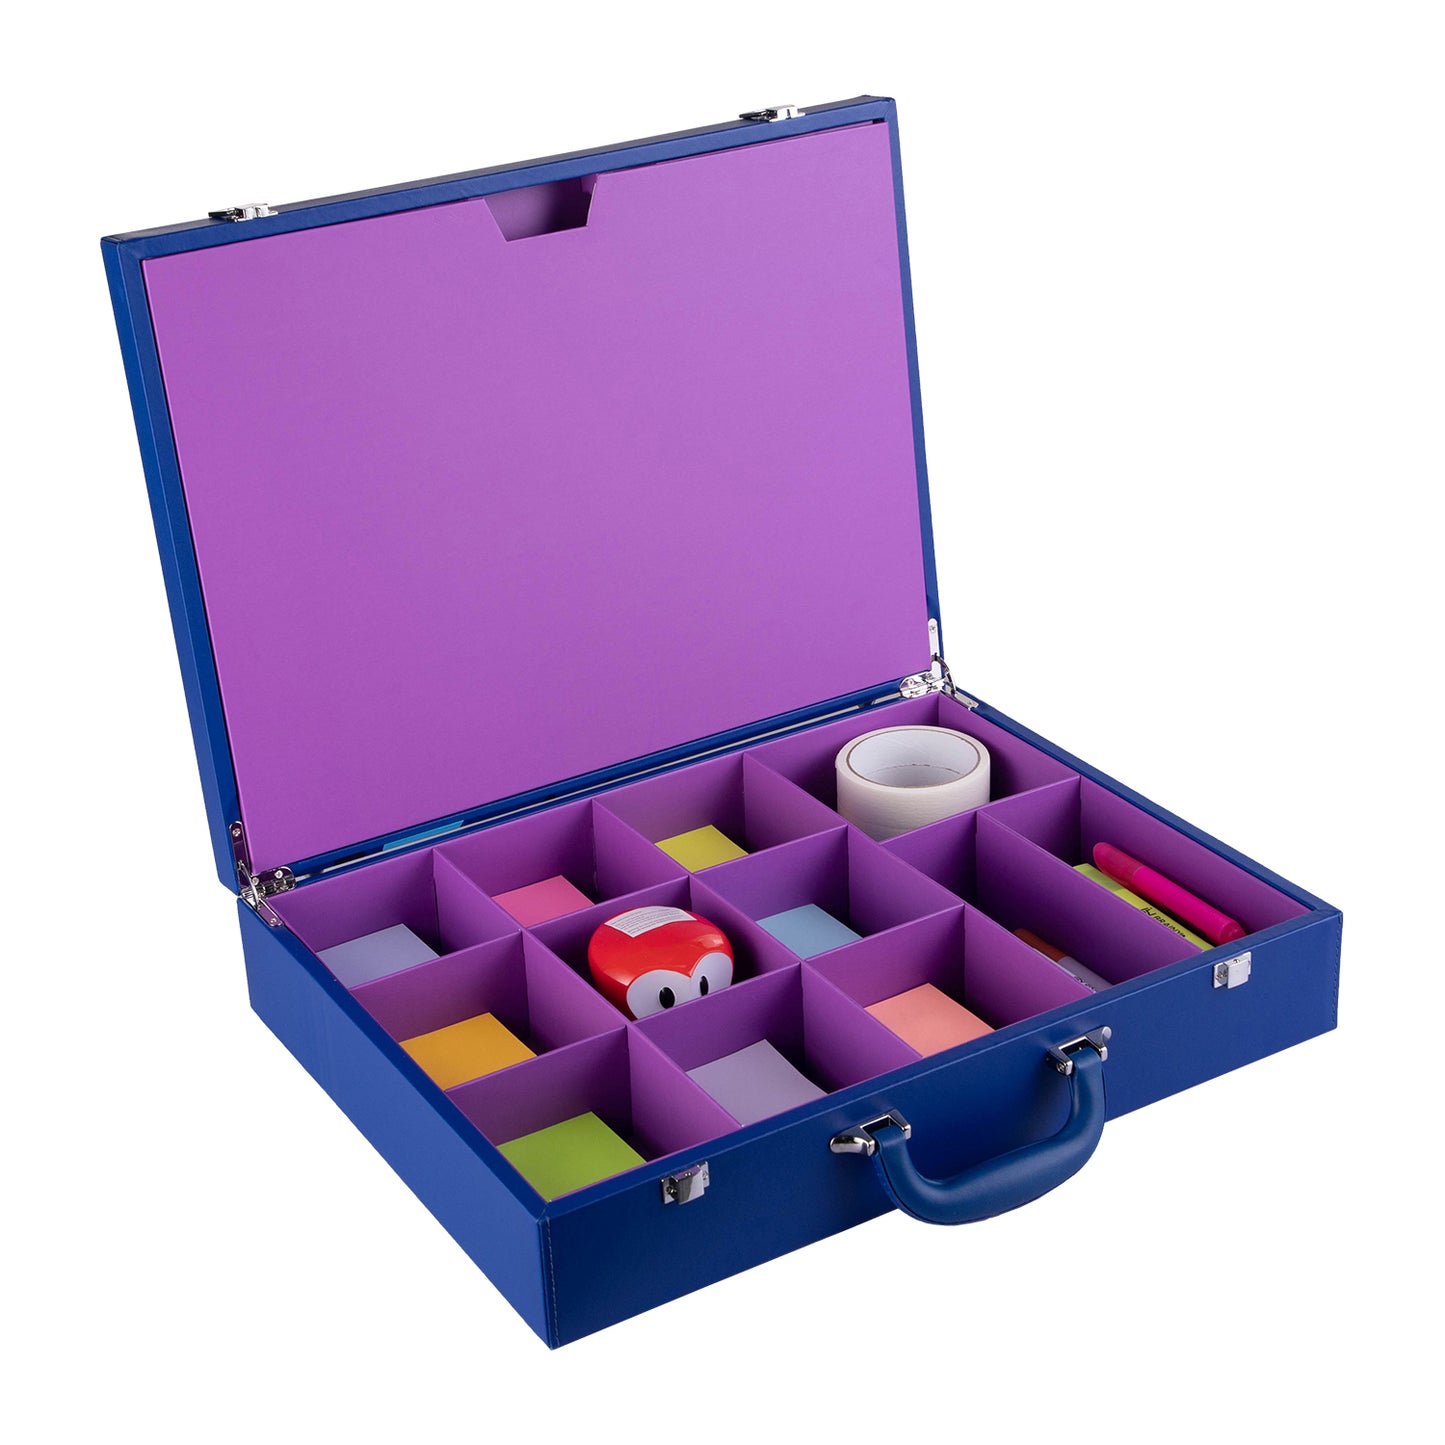 The Ultimate Brainstorming Kit Box